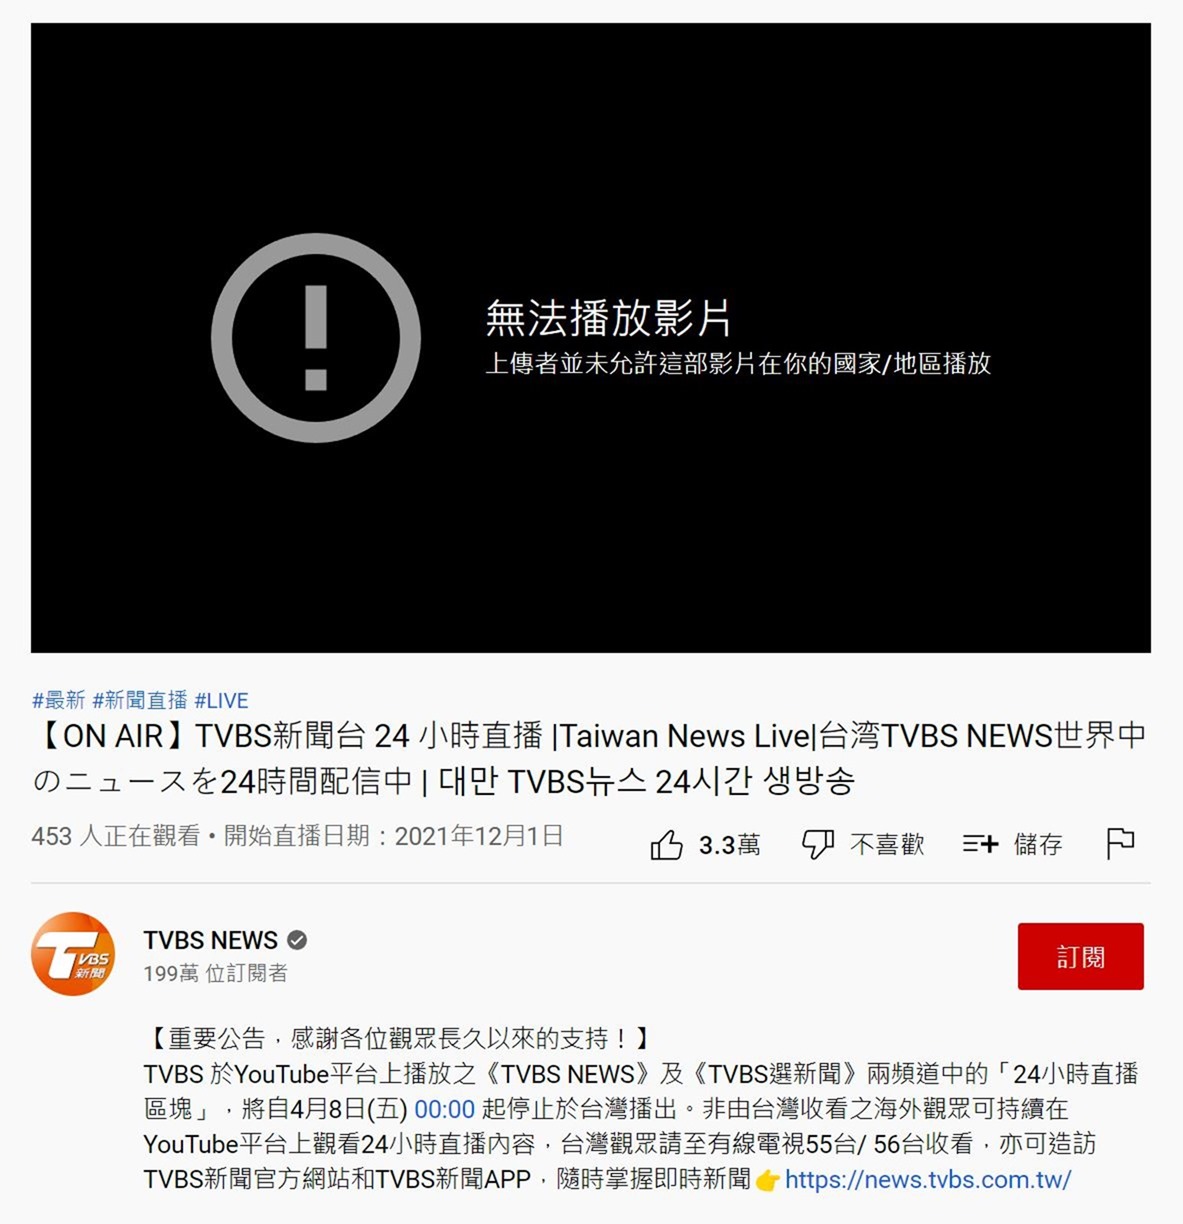 2022-04-11-00_16_55-【ON-AIR】TVBS 新聞台-24-小時直播-_Taiwan-News-Live_台湾 TVBS-NEWS 世界中のニュースを24 時間配信中-_-대만-TVBS뉴_thumb.jpg @3C 達人廖阿輝